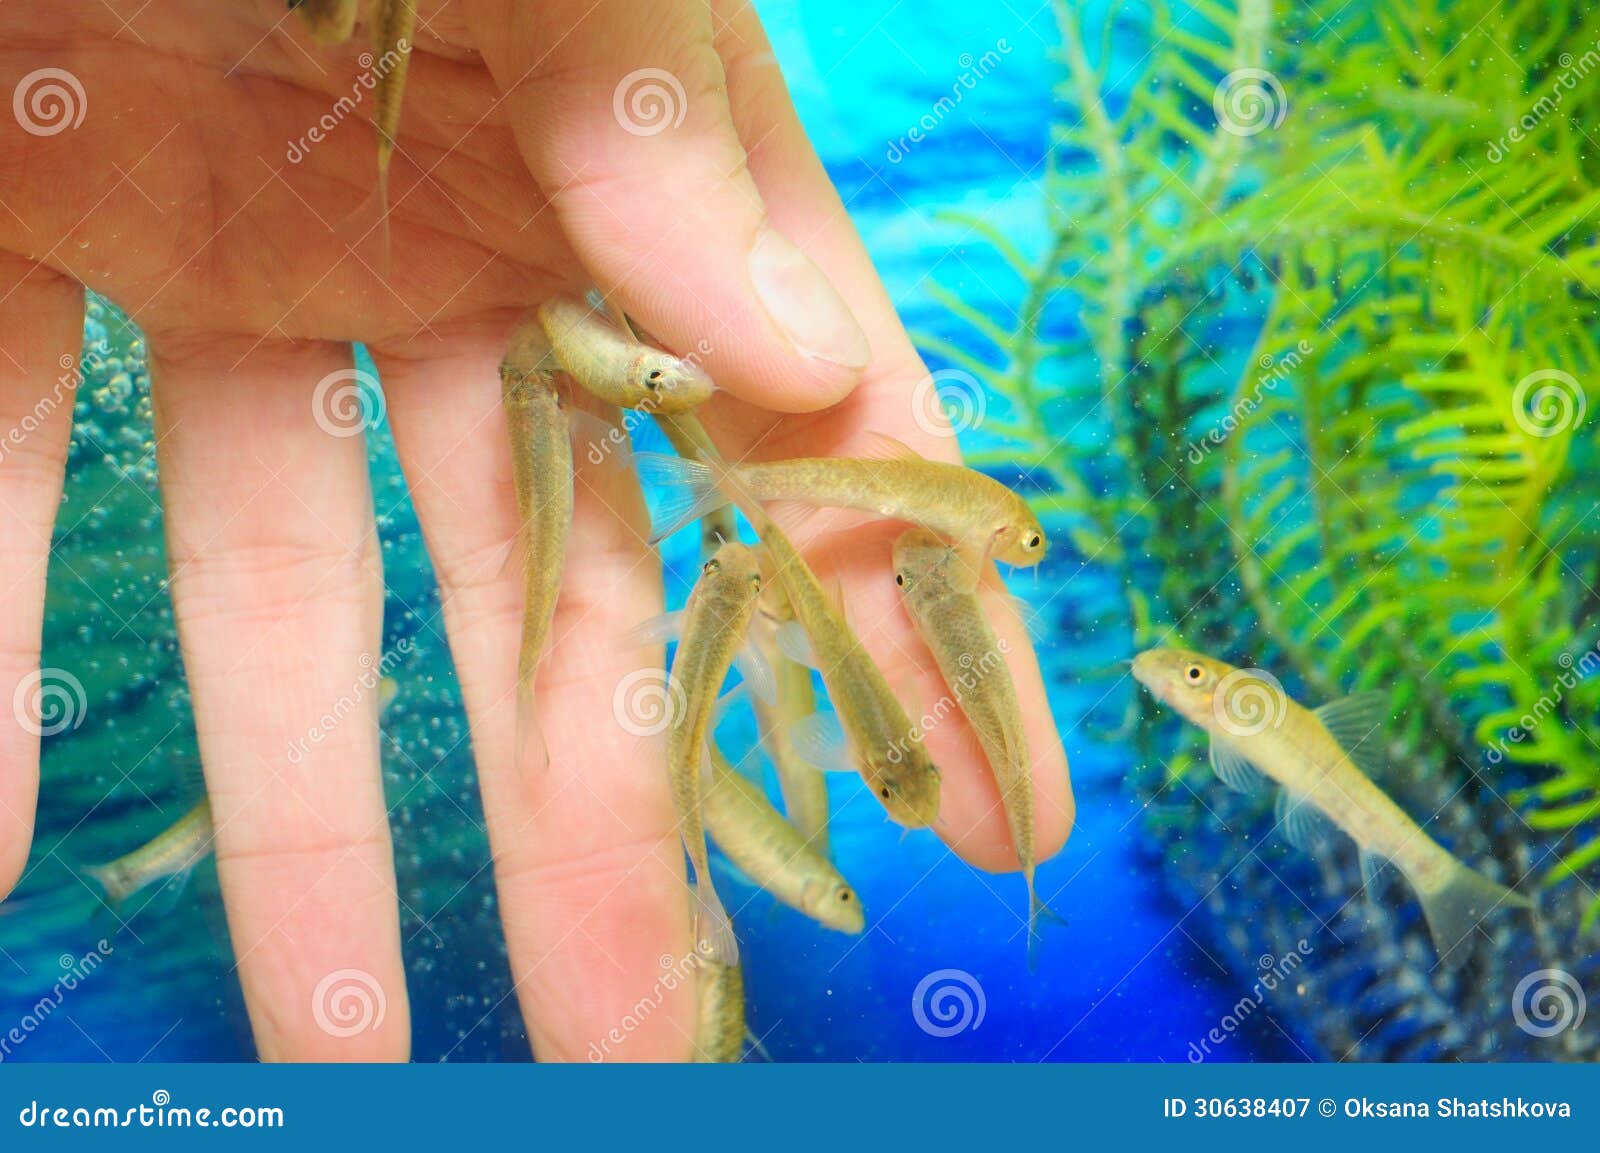 Fish Spa Feet Pedicure Image & Photo (Free Trial) | Bigstock